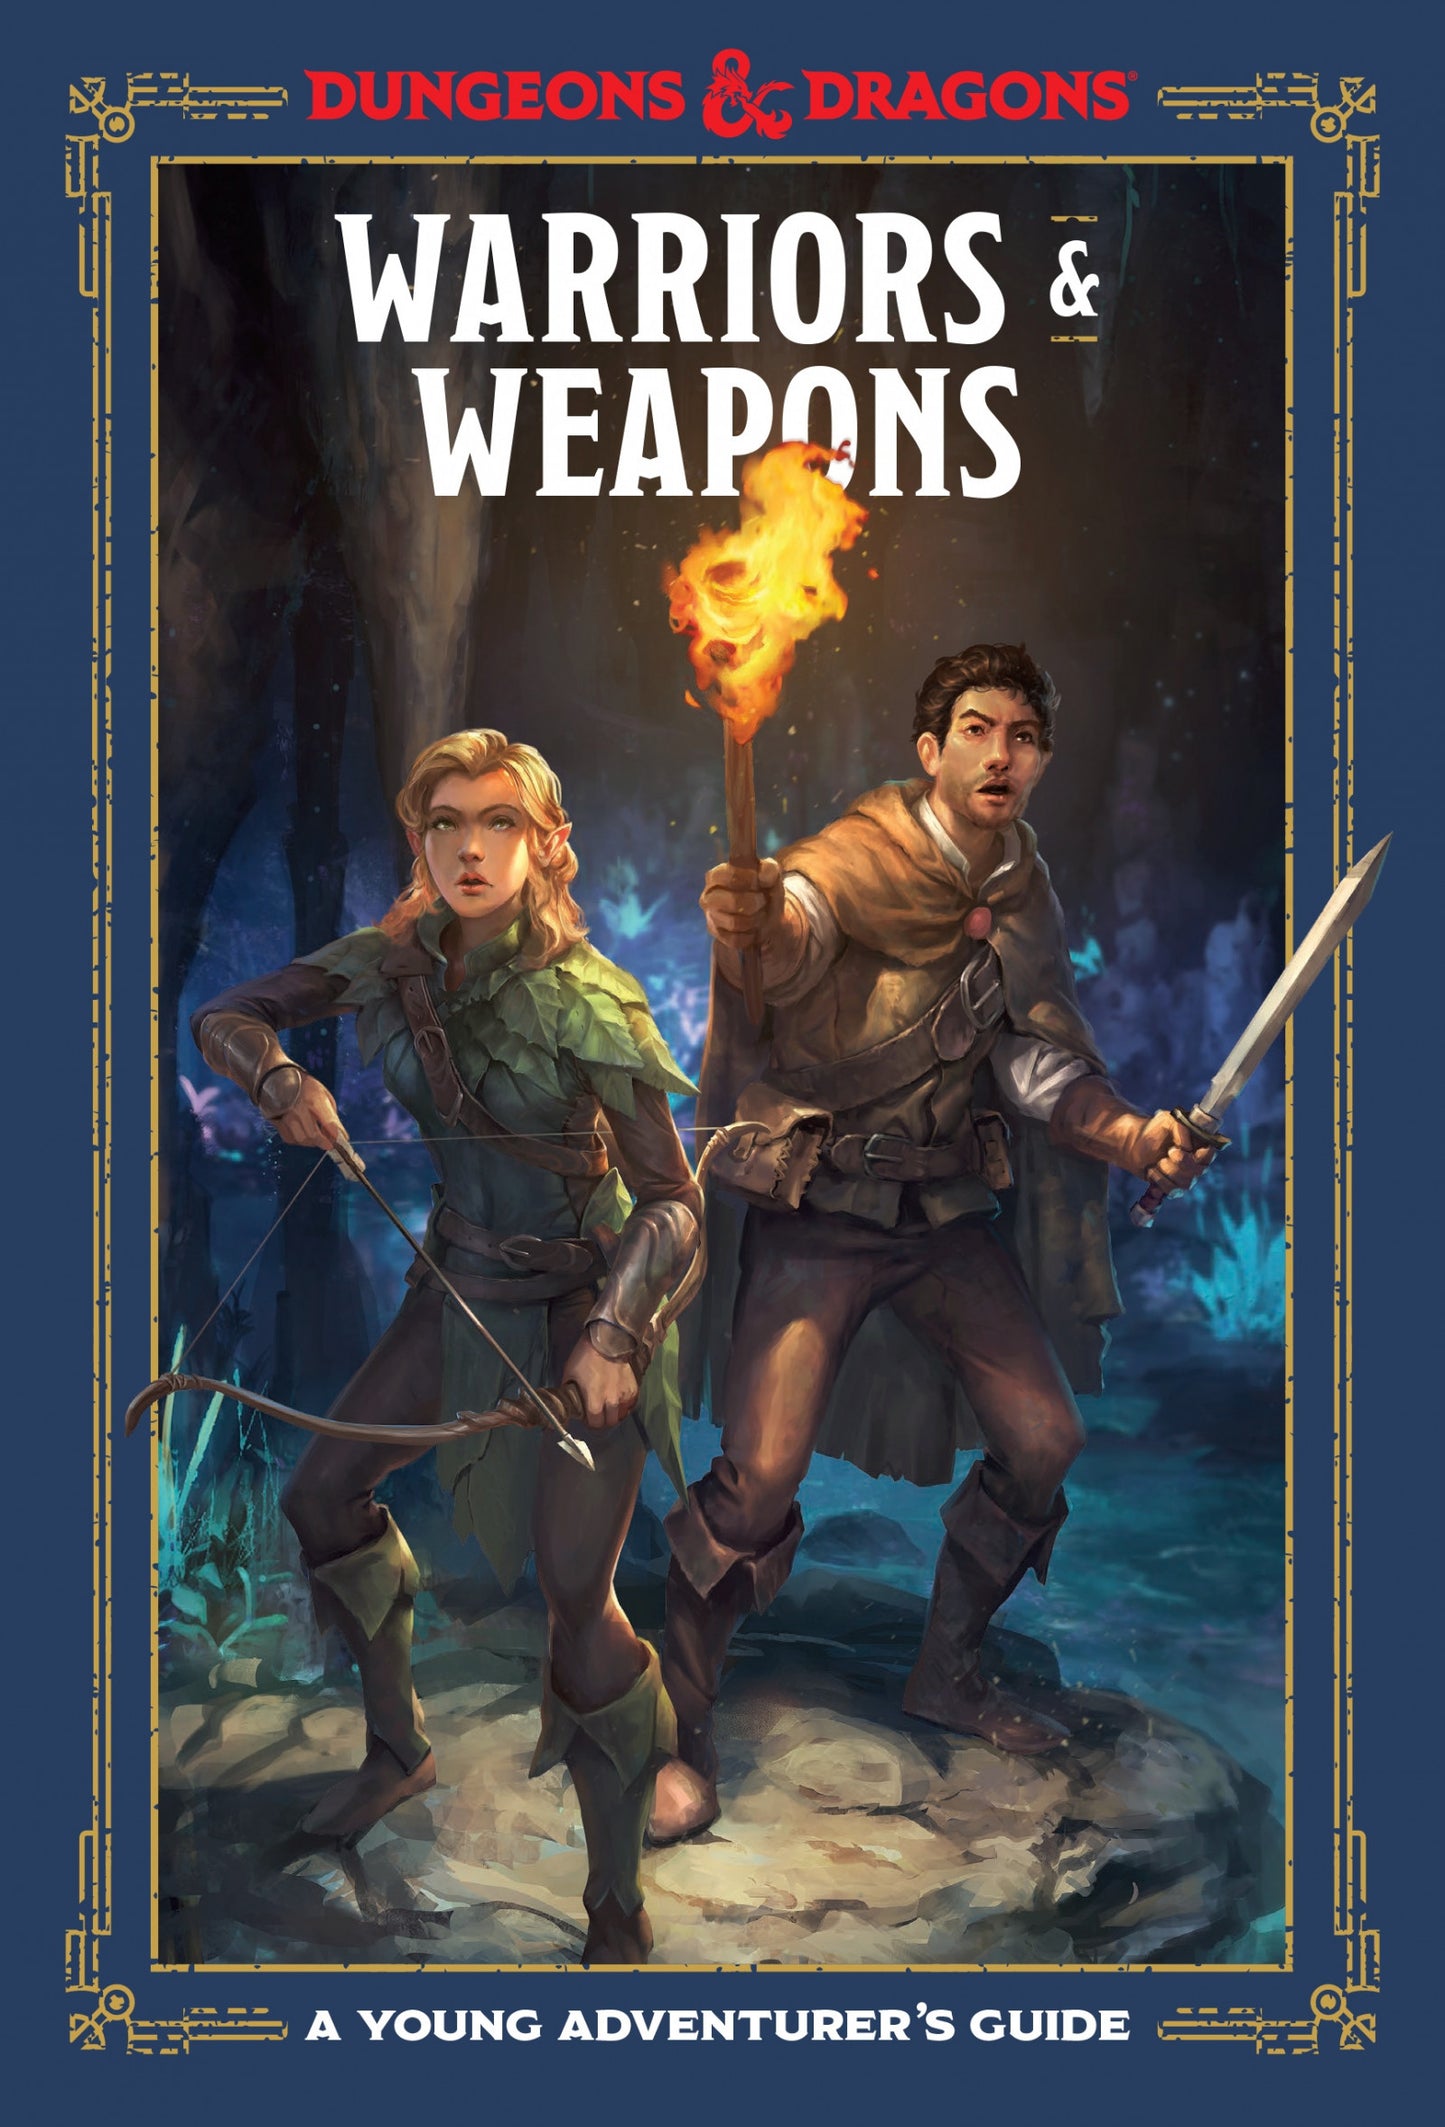 D&D Dungeons & Dragons Warriors & Weapons